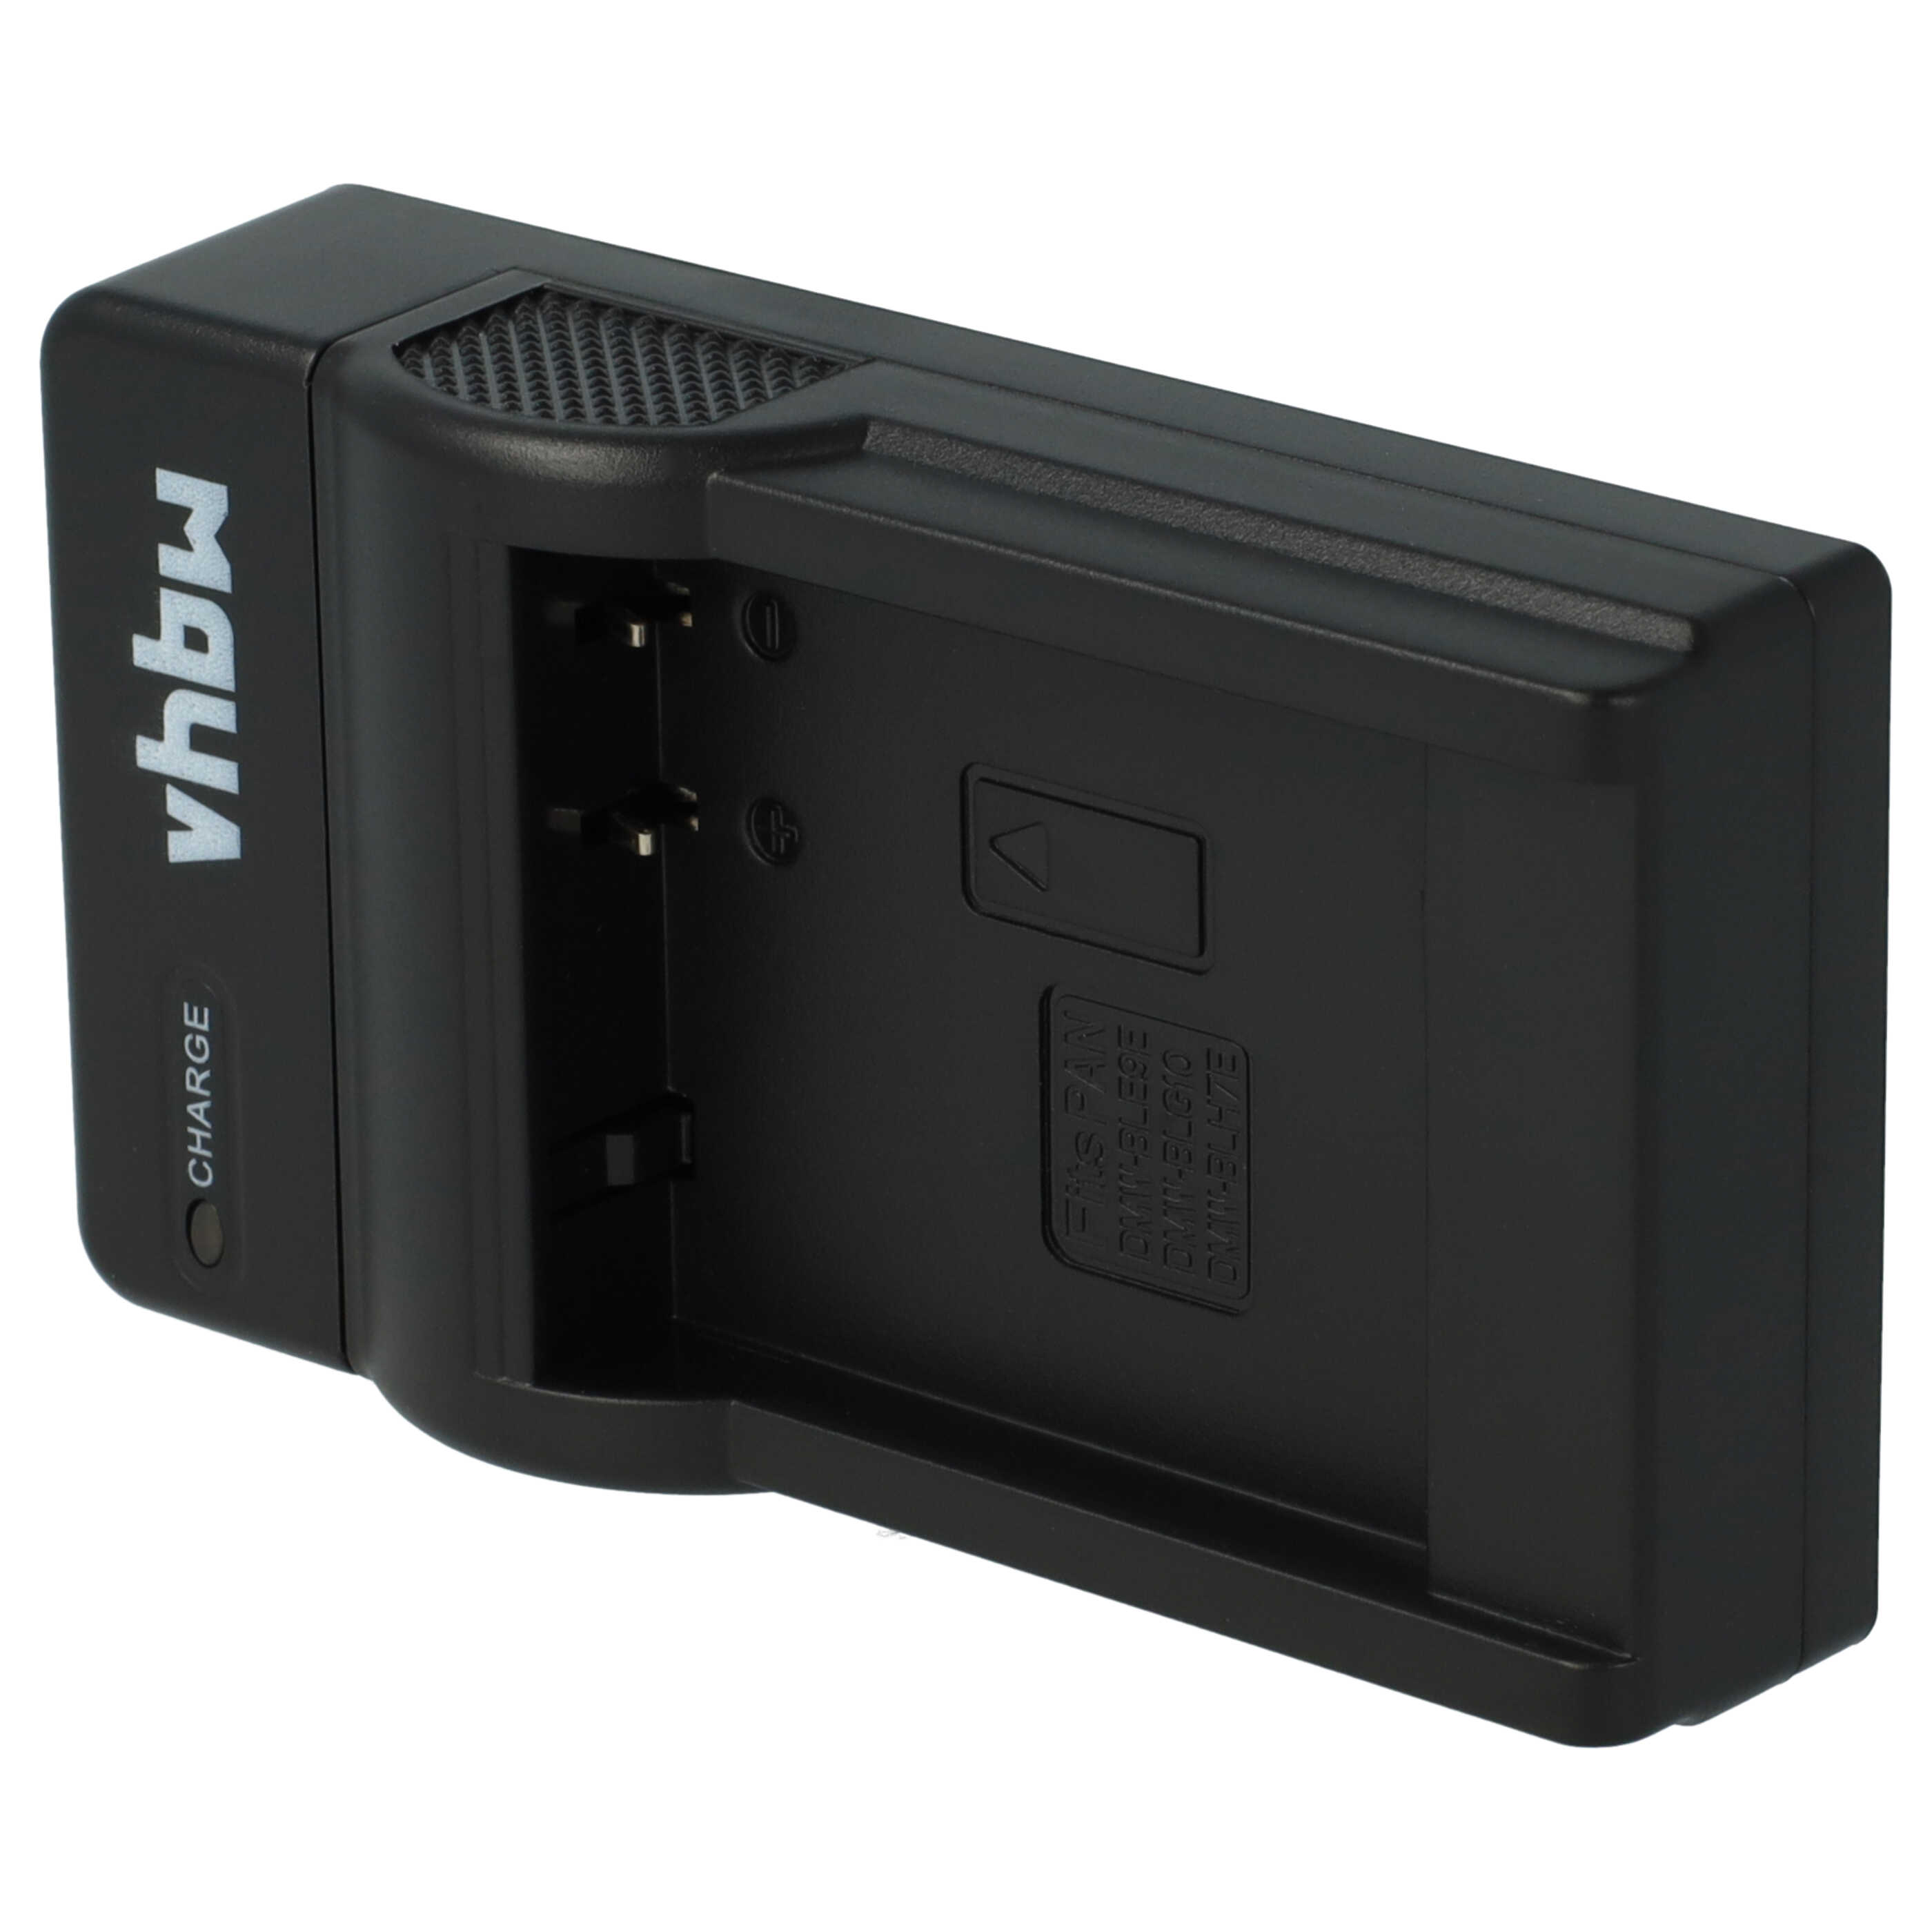 Akku Ladegerät passend für D-Lux Typ109 Kamera u.a. - 0,5 A, 8,4 V